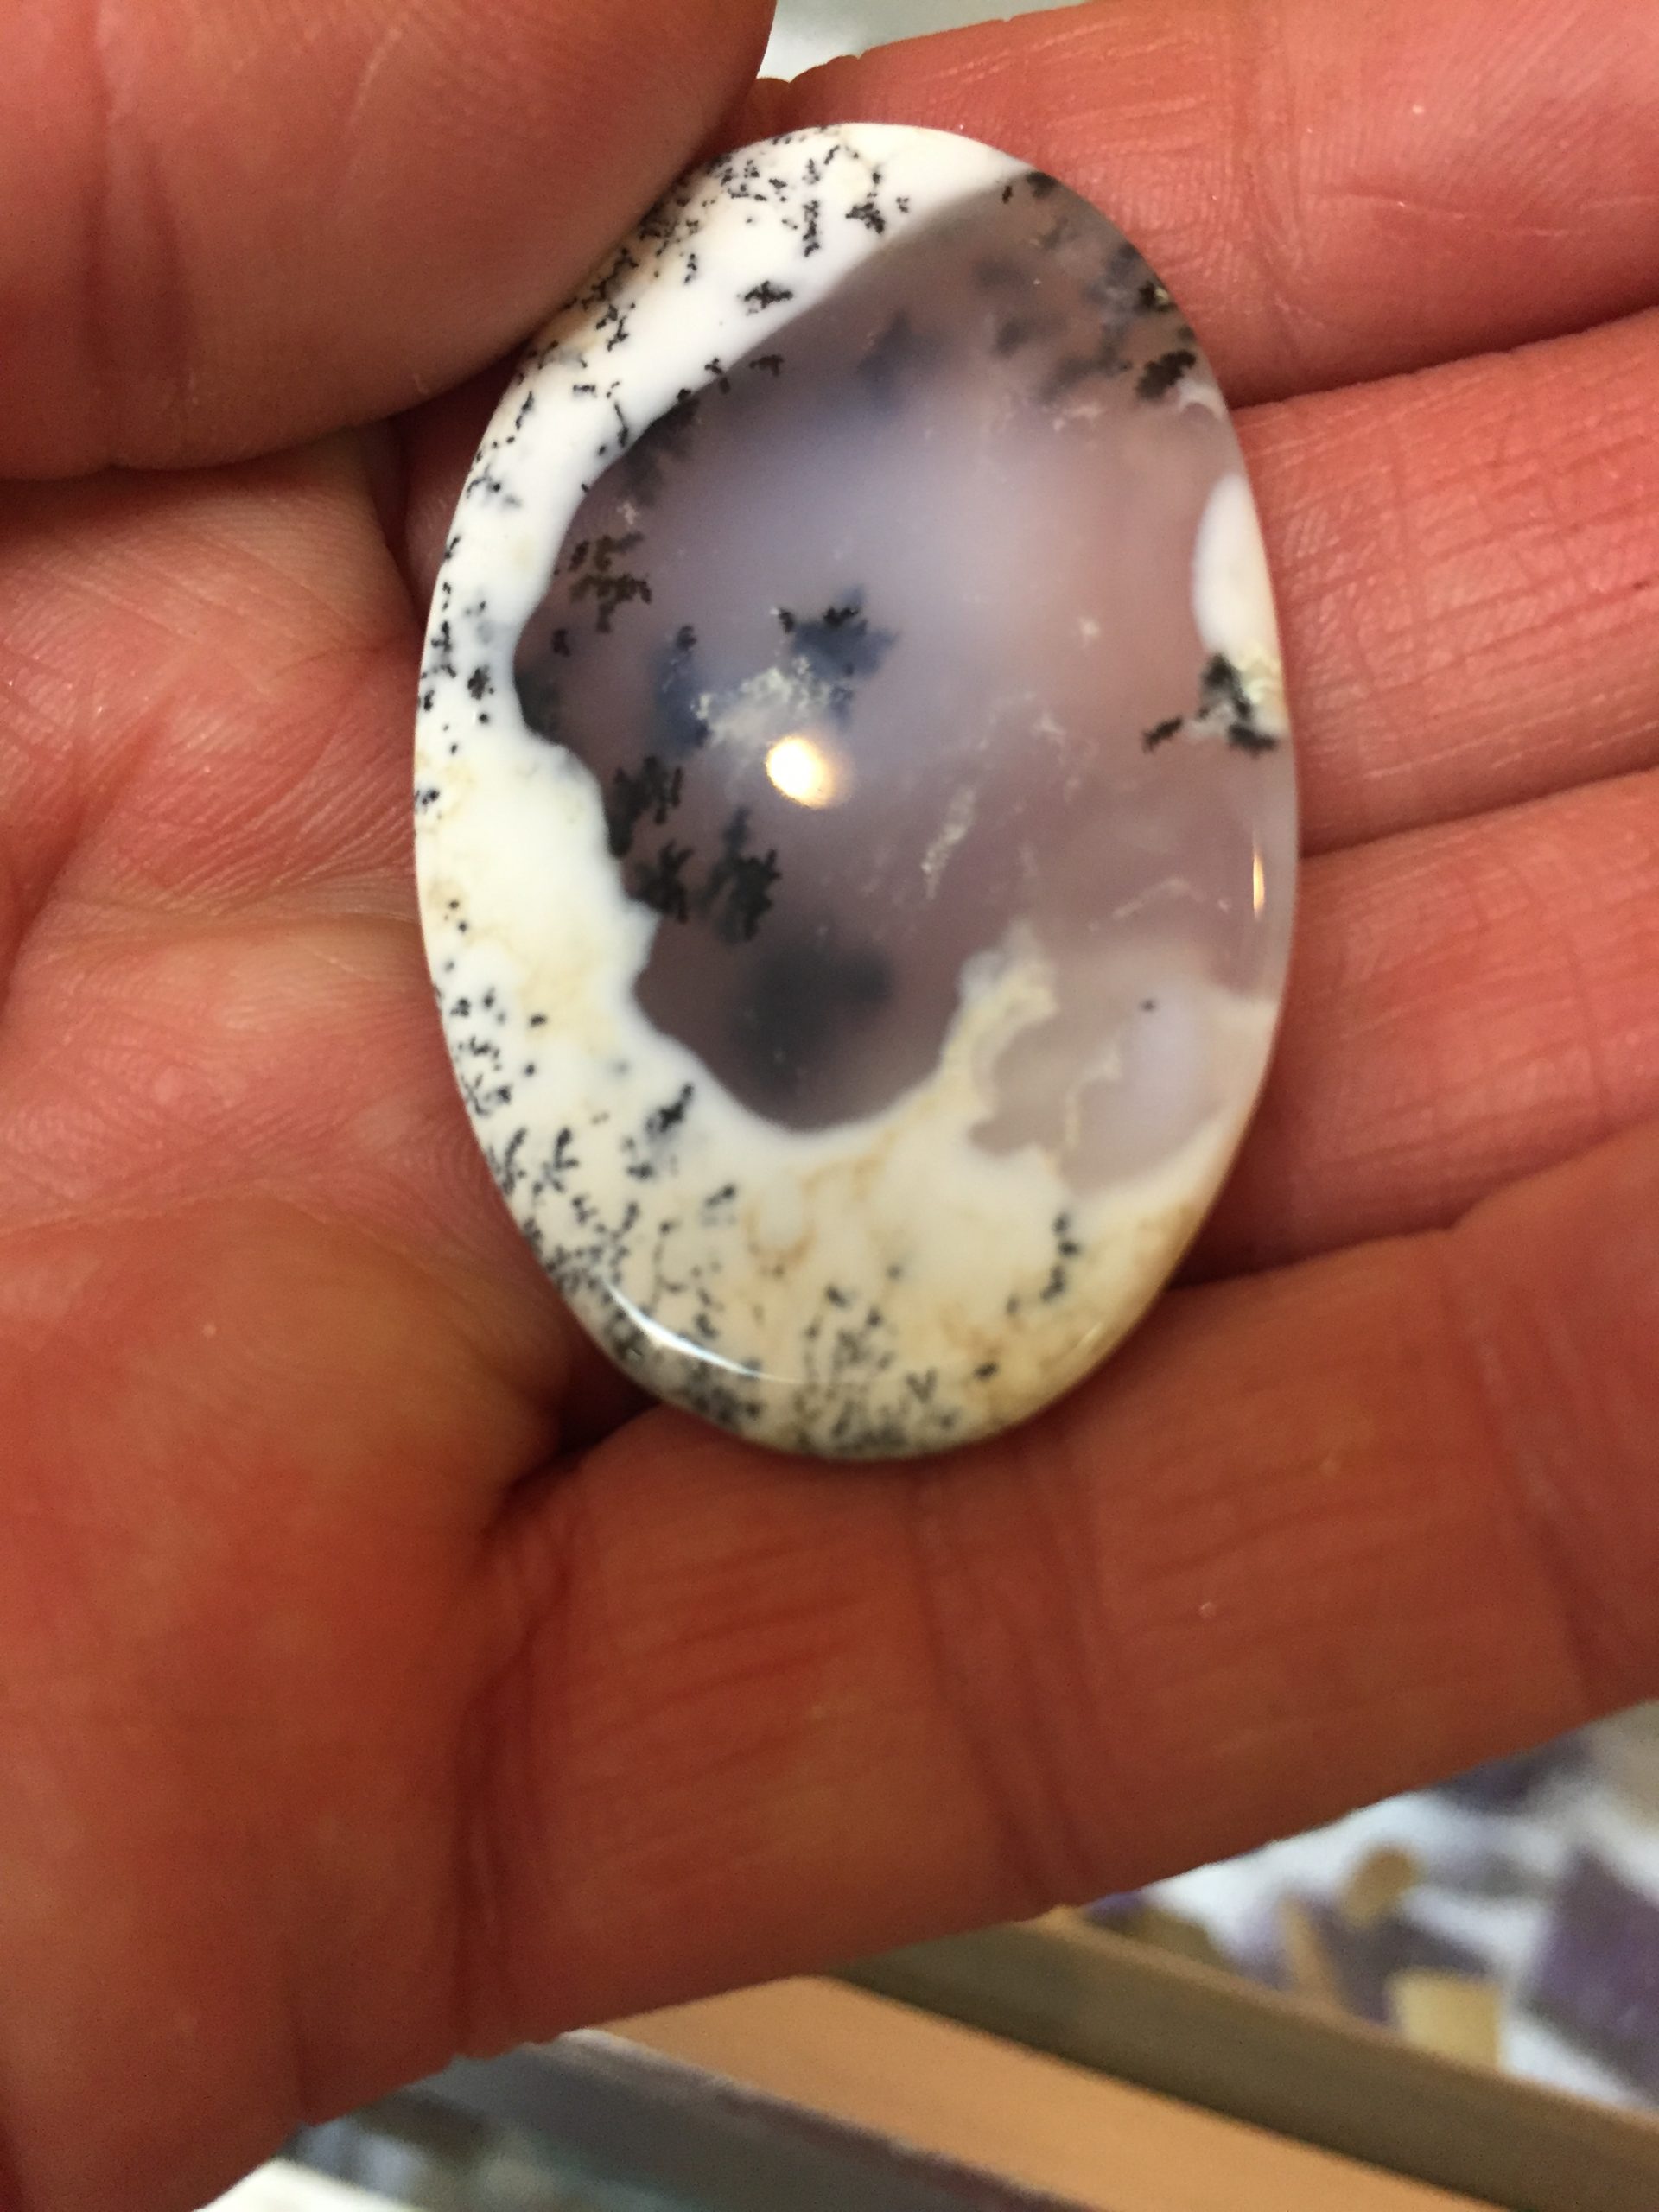 dendrite opal healing properties